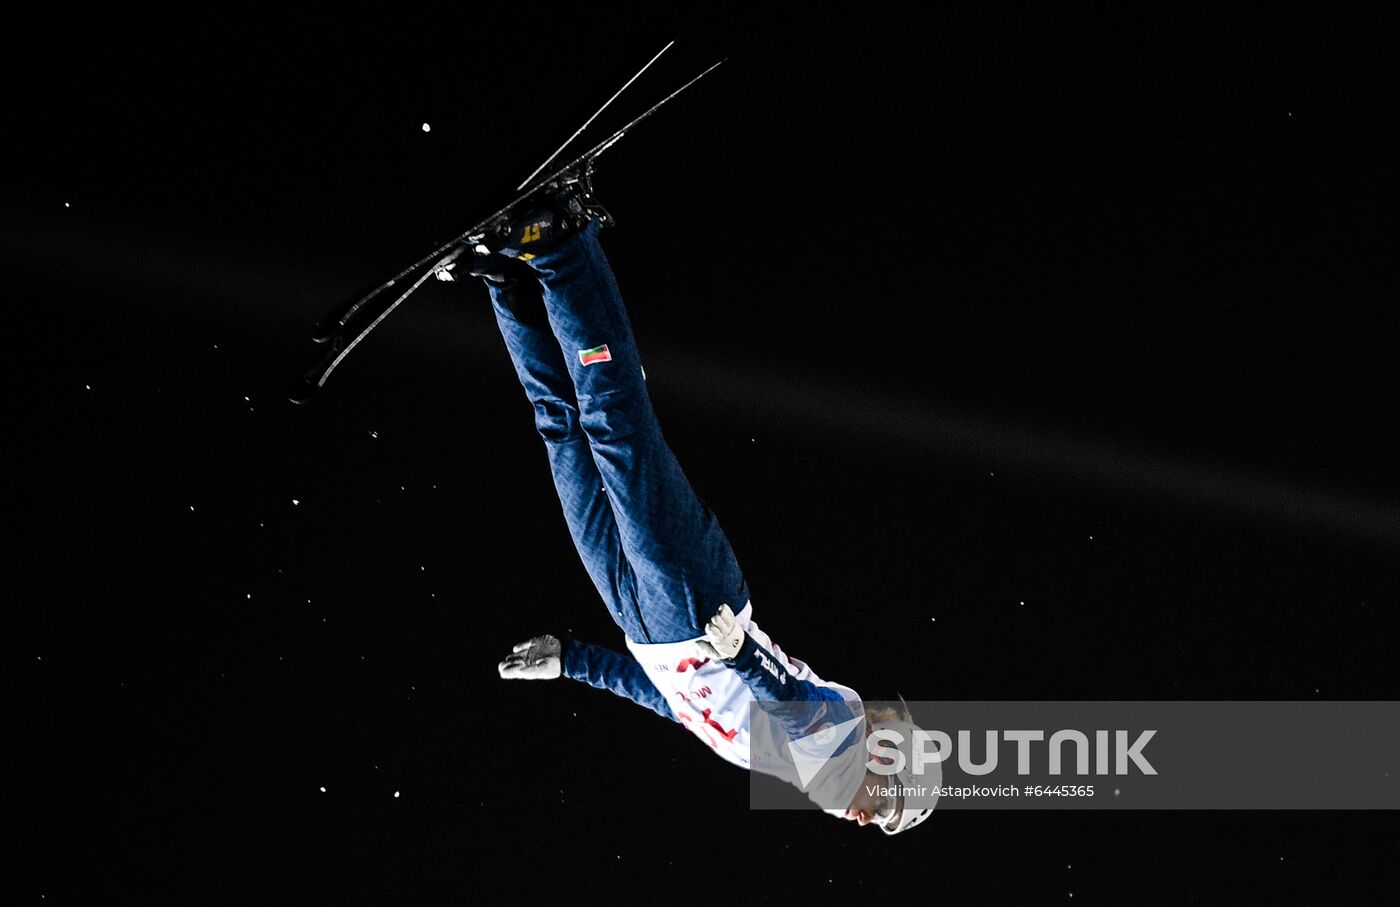 Russia Freestyle World Cup Ski